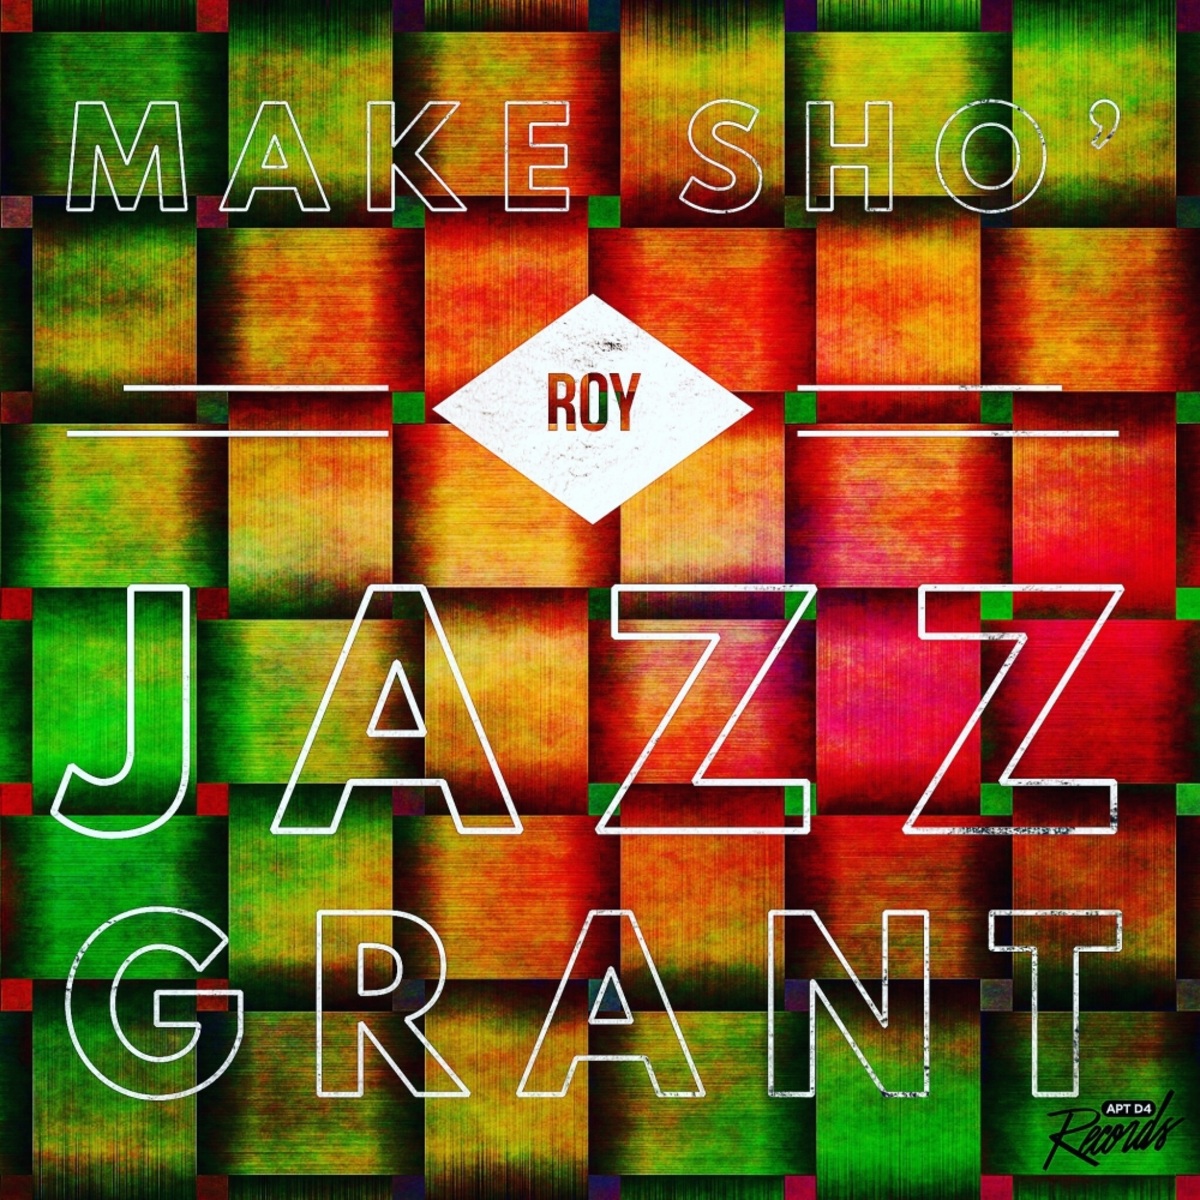 Roy Jazz Grant - Make Sho’ / Apt D4 Records